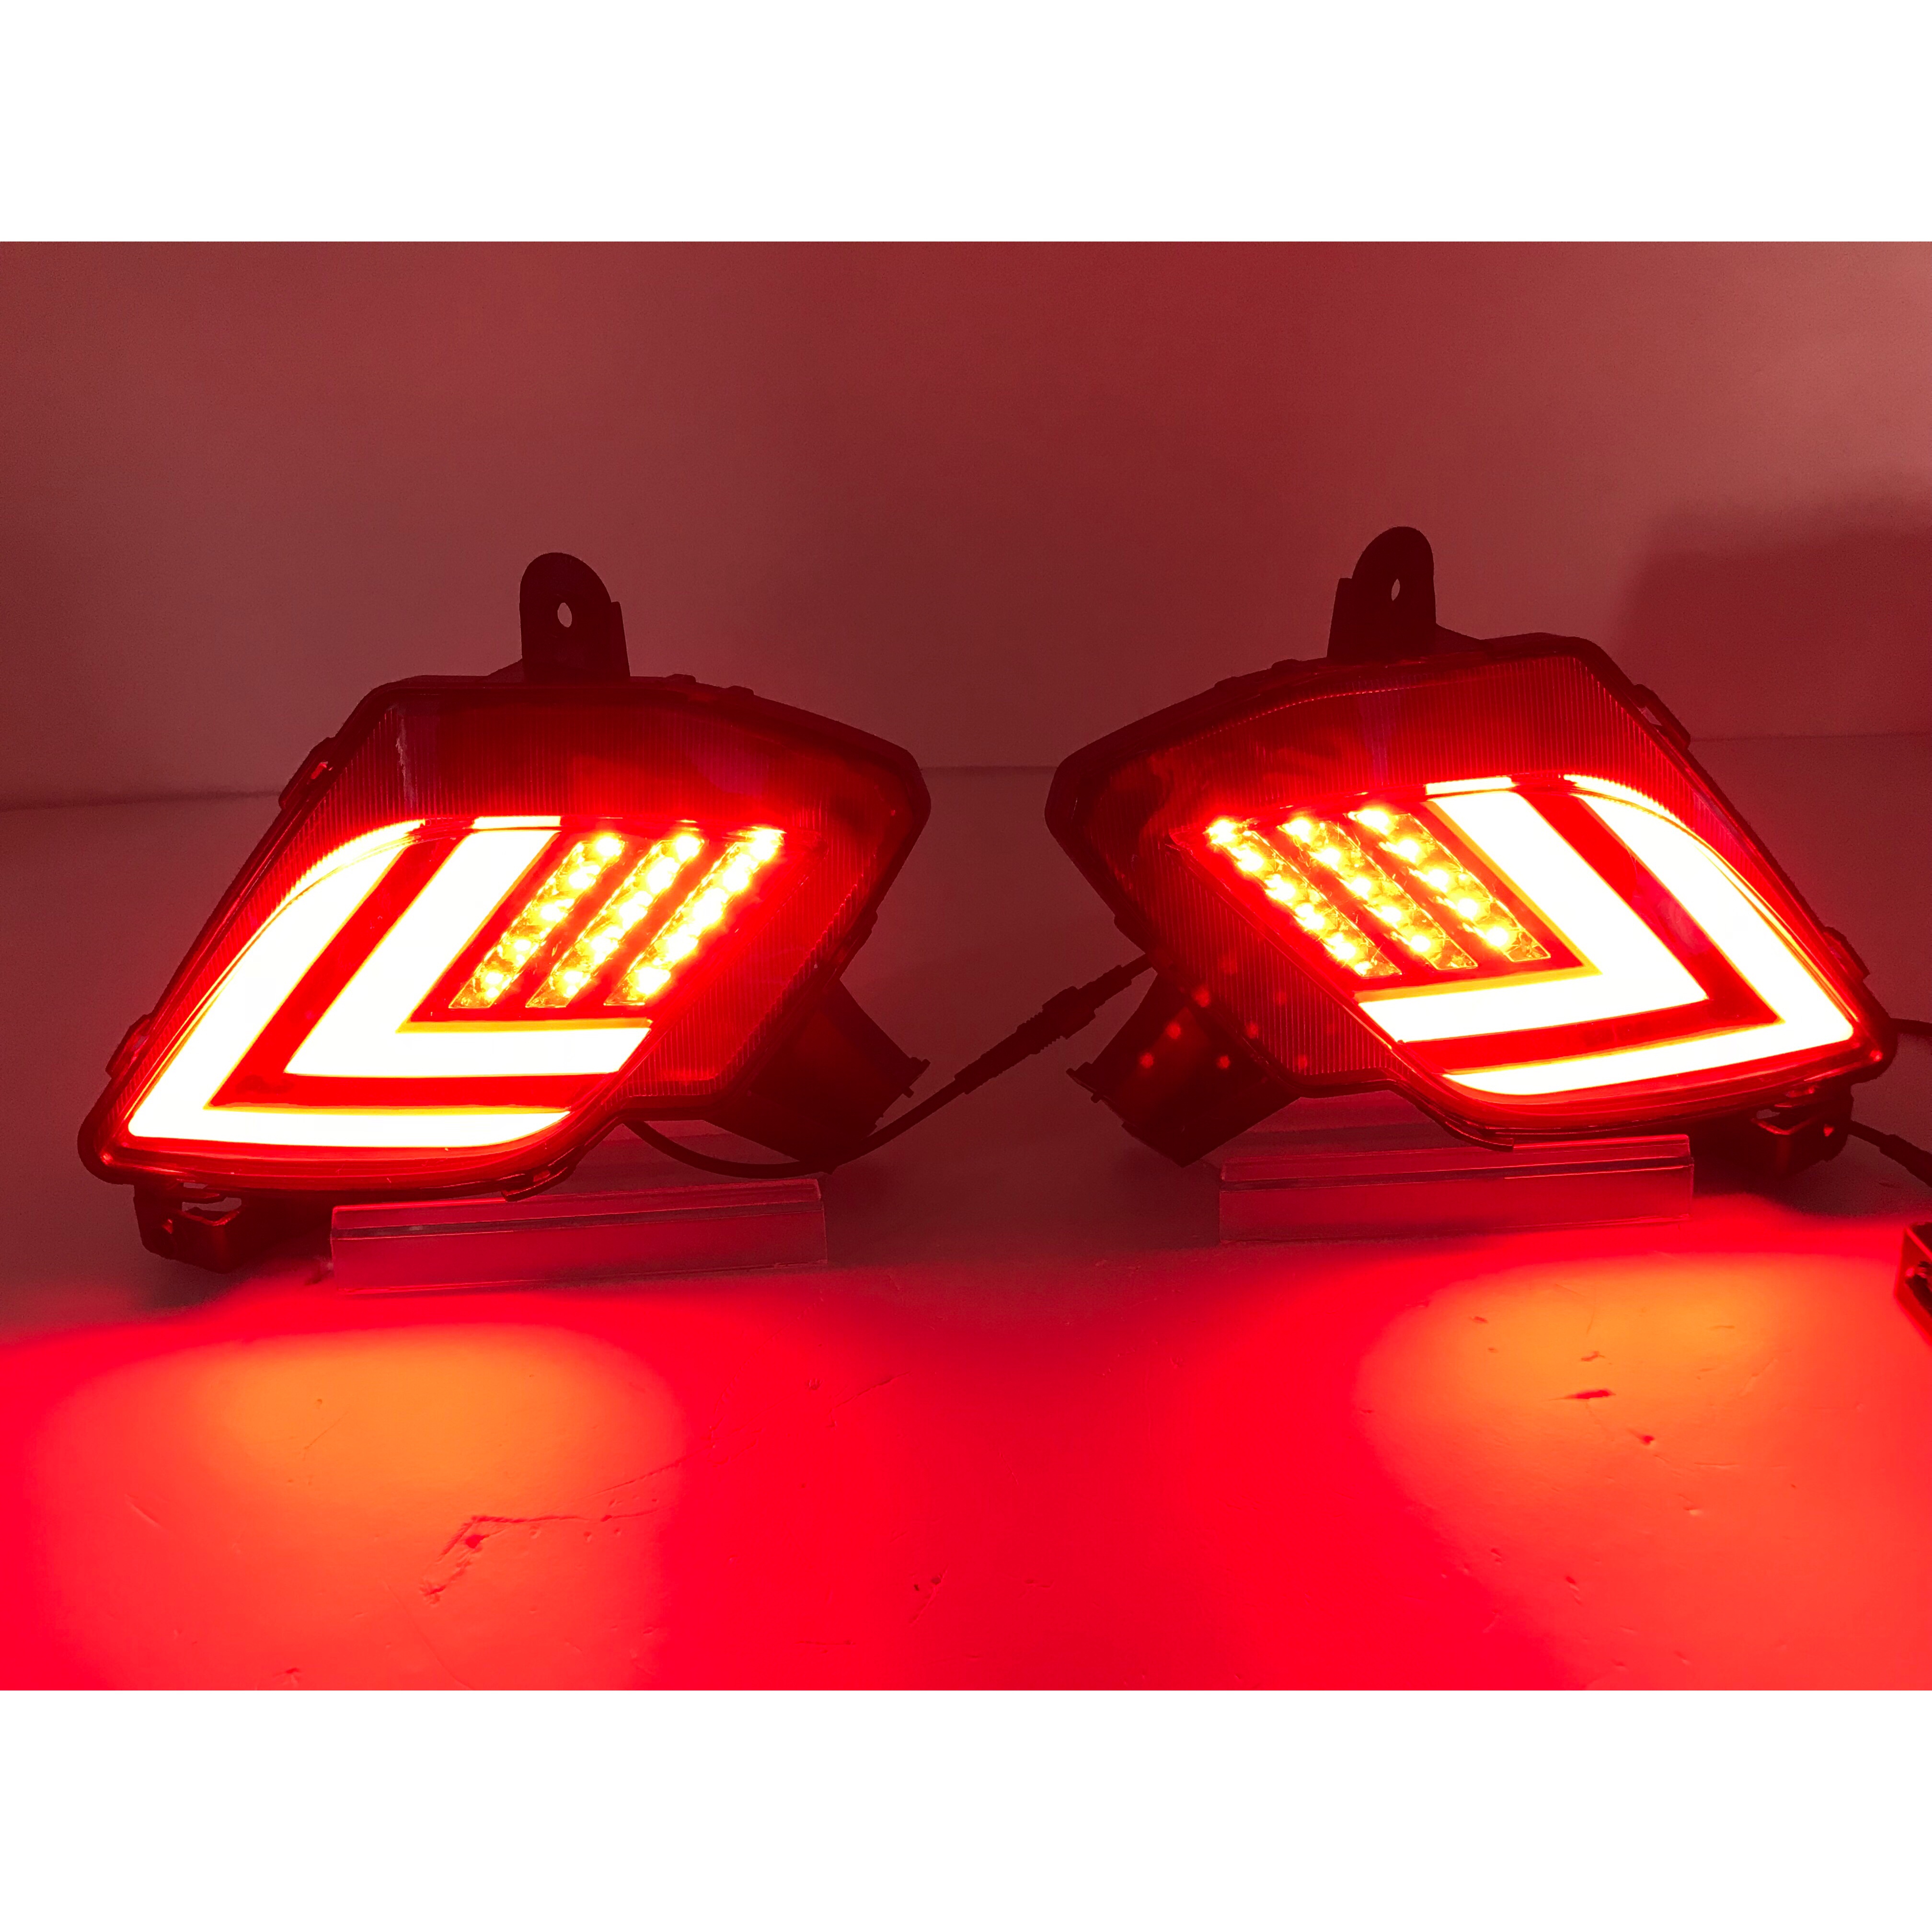 Hot selling led reflector rear bumper light for mazda cx-5 back light indicator